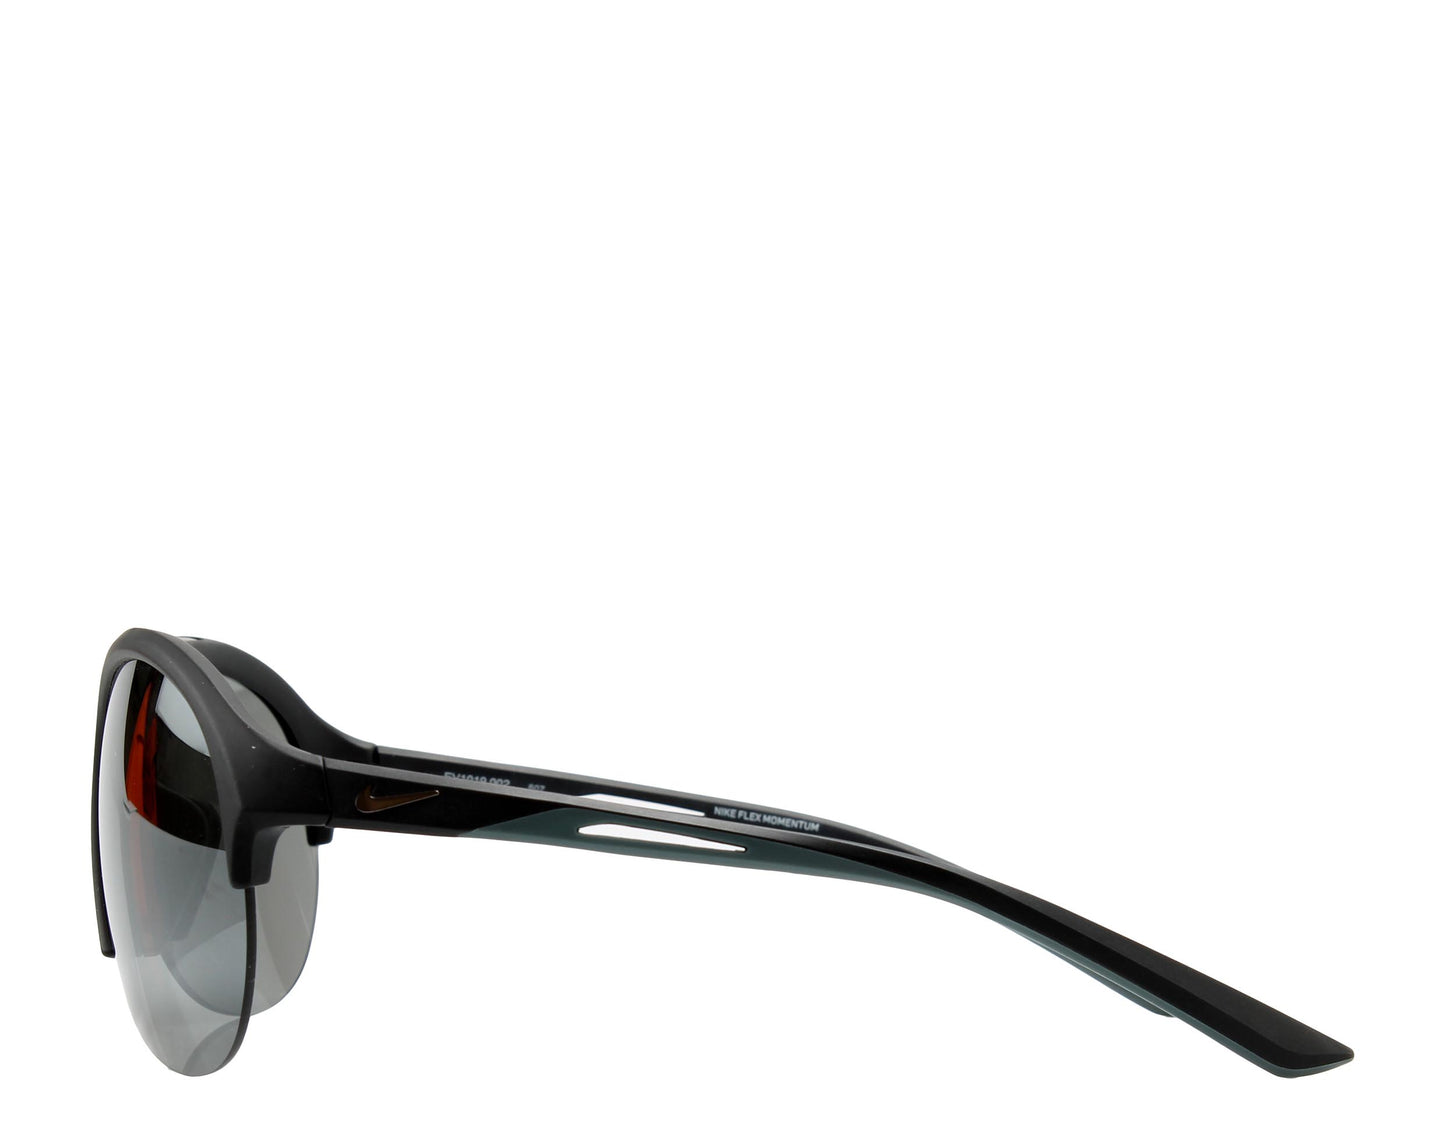 Nike Flex Momentum Matte Black Grey/Silver Flash Lens Sport Sunglasses EV1019-002